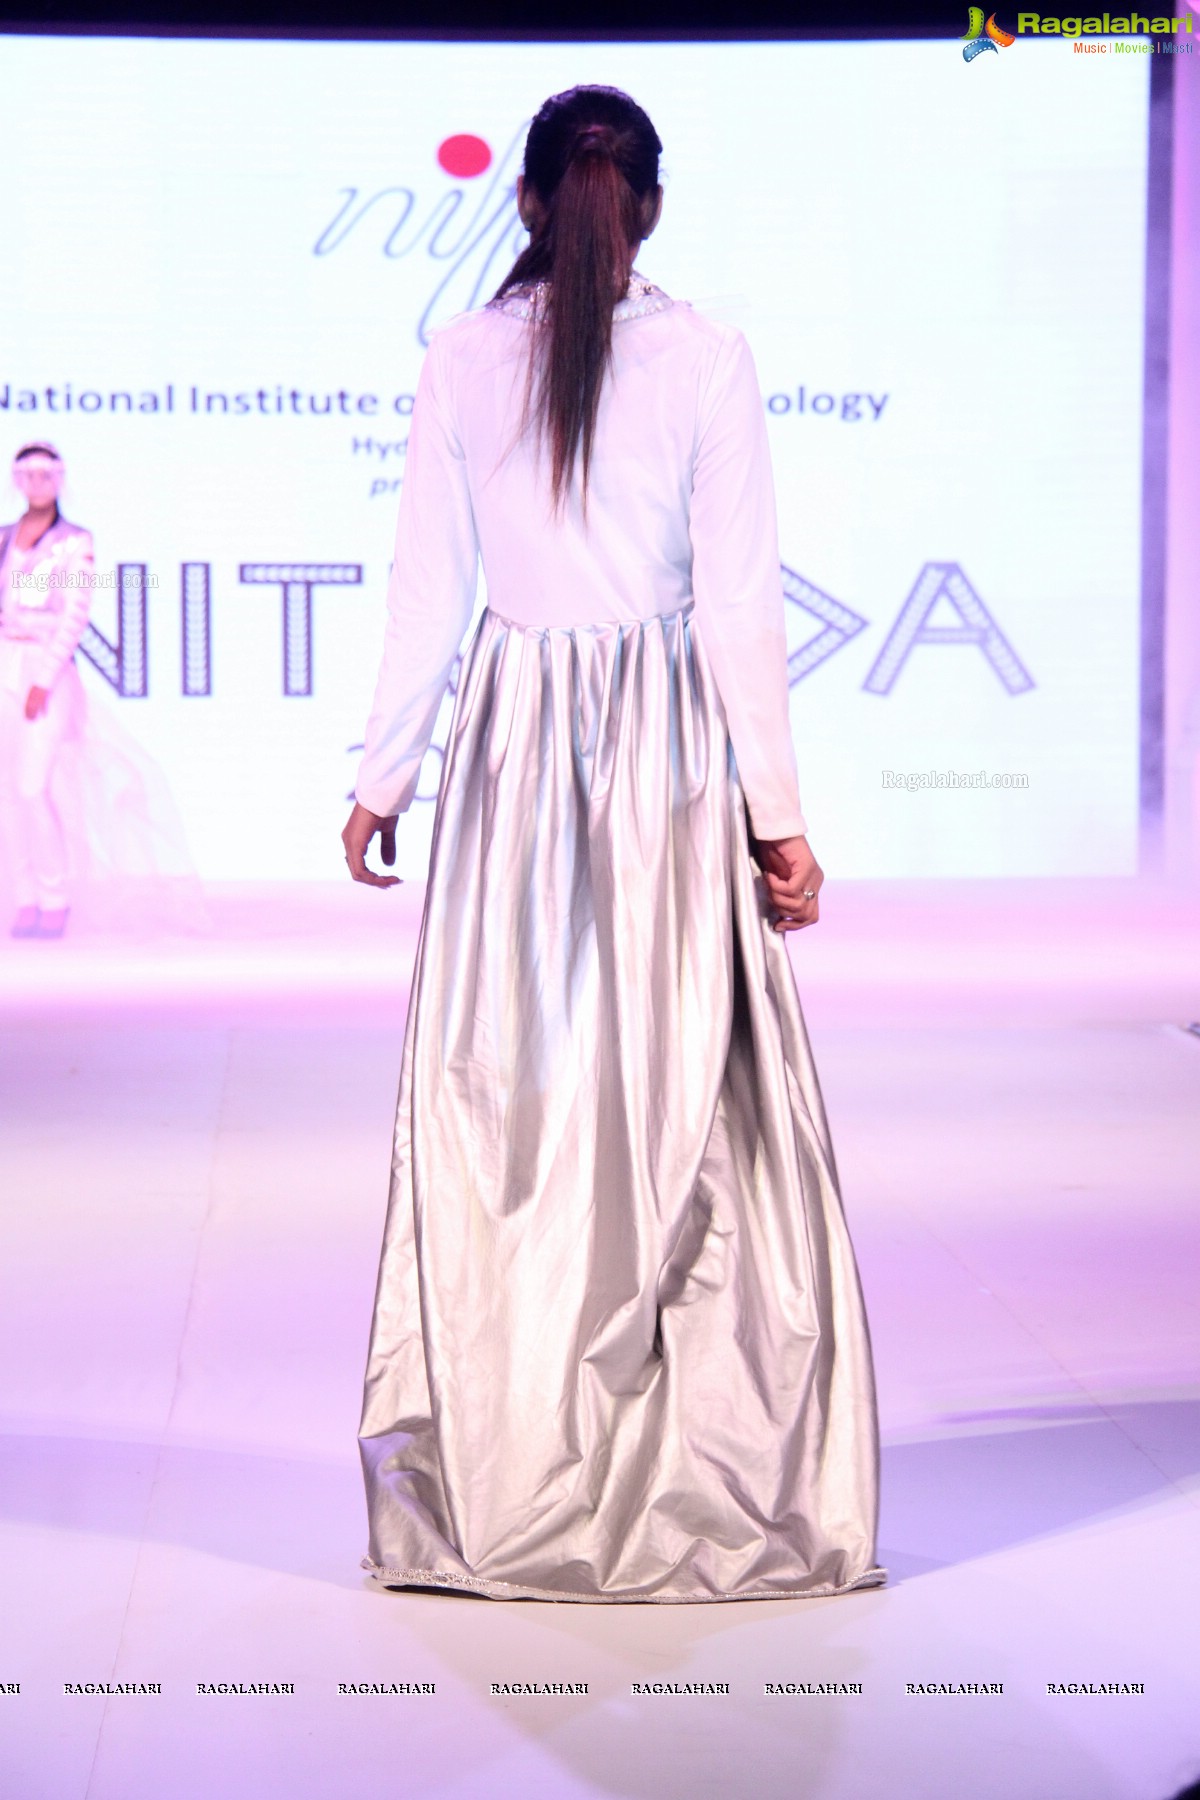 NIFT KNITMODA 2014, Hyderabad